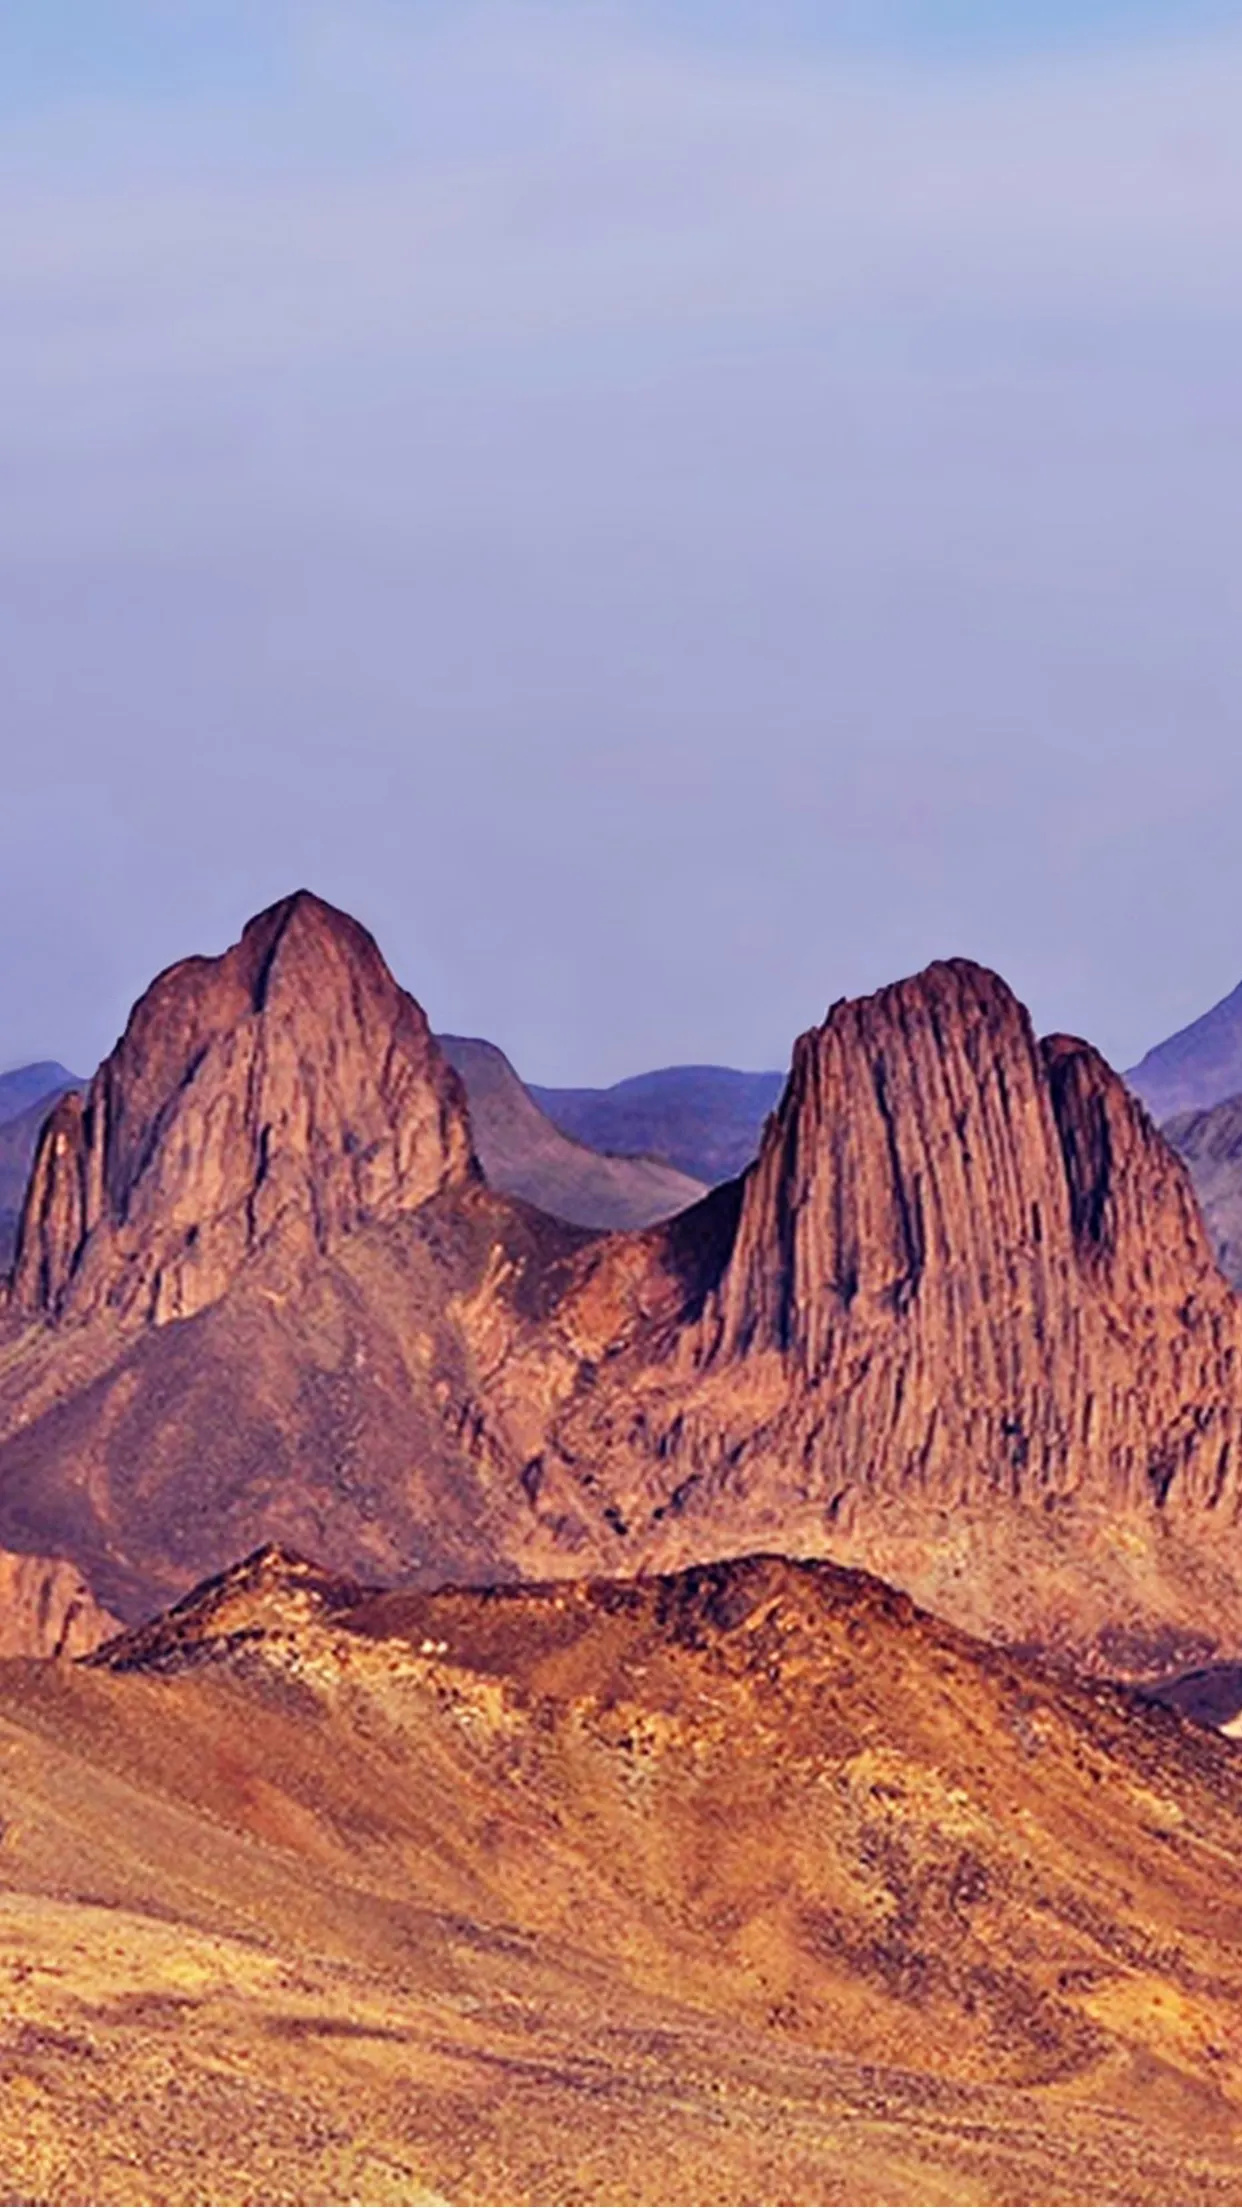 Algeria desert wallpaper, iPhone 11 Pro Max, Free download, Stunning landscapes, 1250x2210 HD Handy